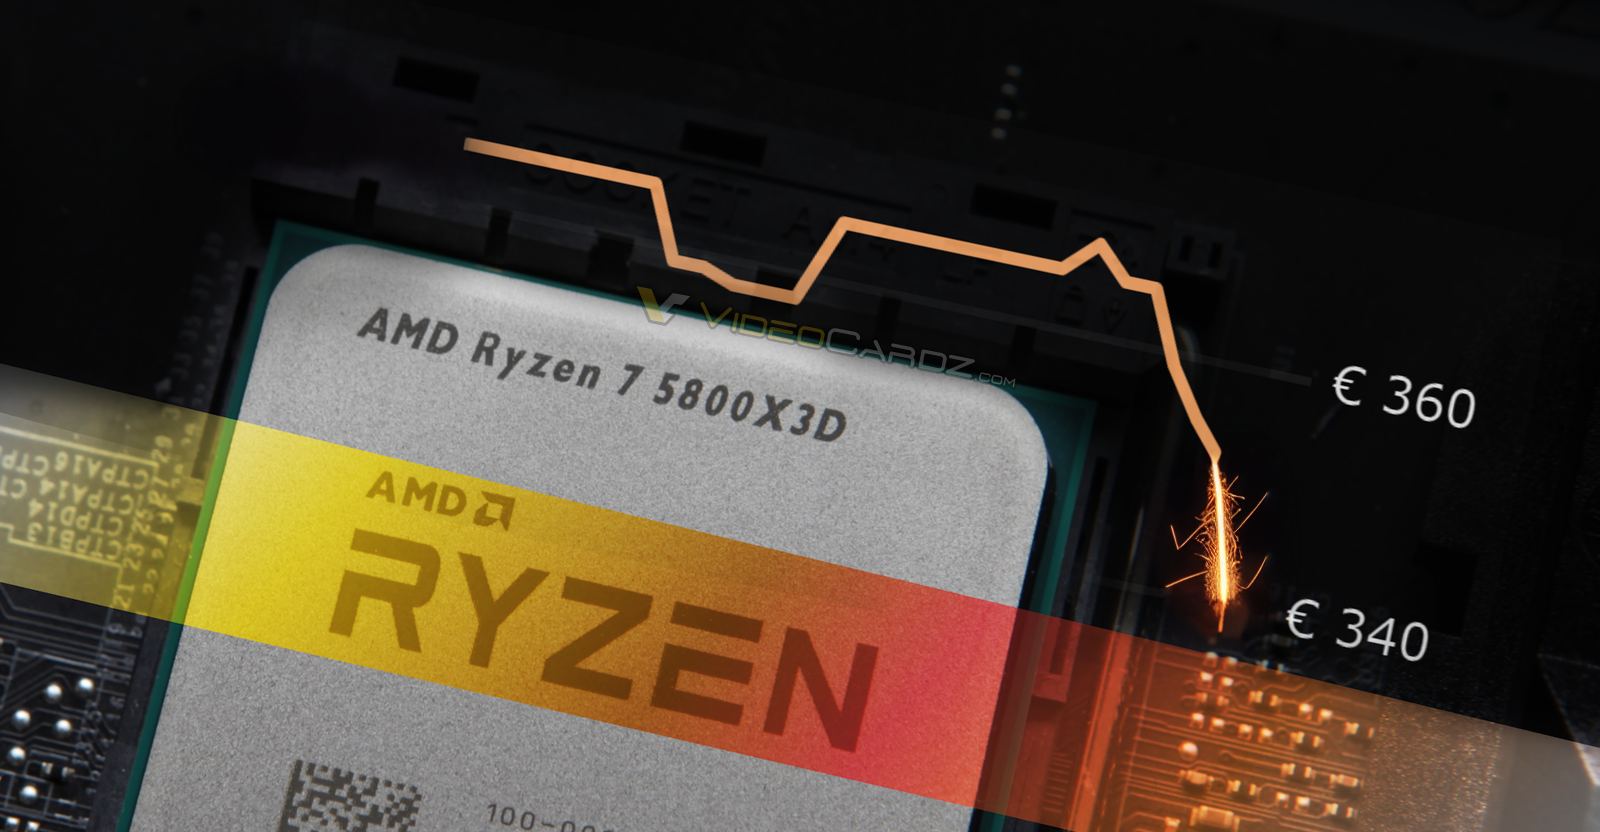 Ryzen 7 5800X3D vs Ryzen 9 5950X: AM4 face-off - PC Guide